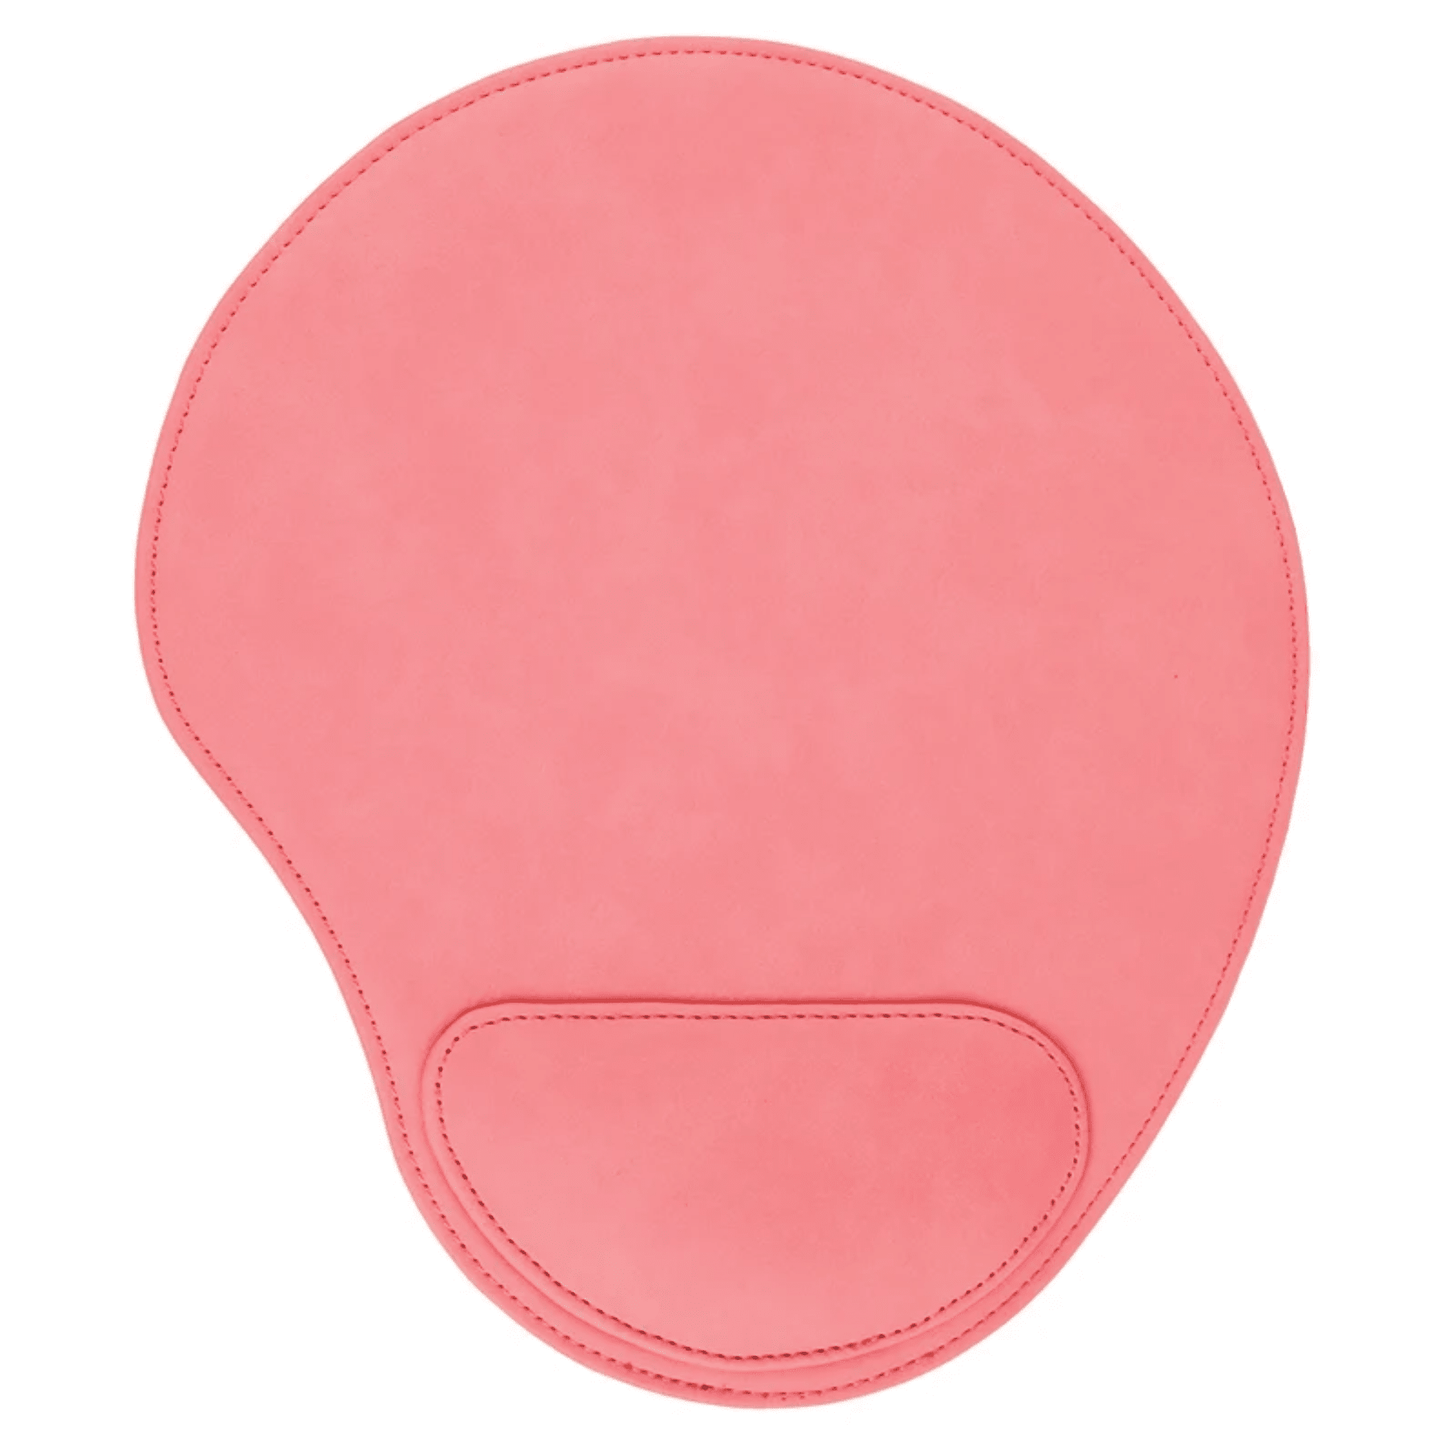 Leatherette Mouse Pad